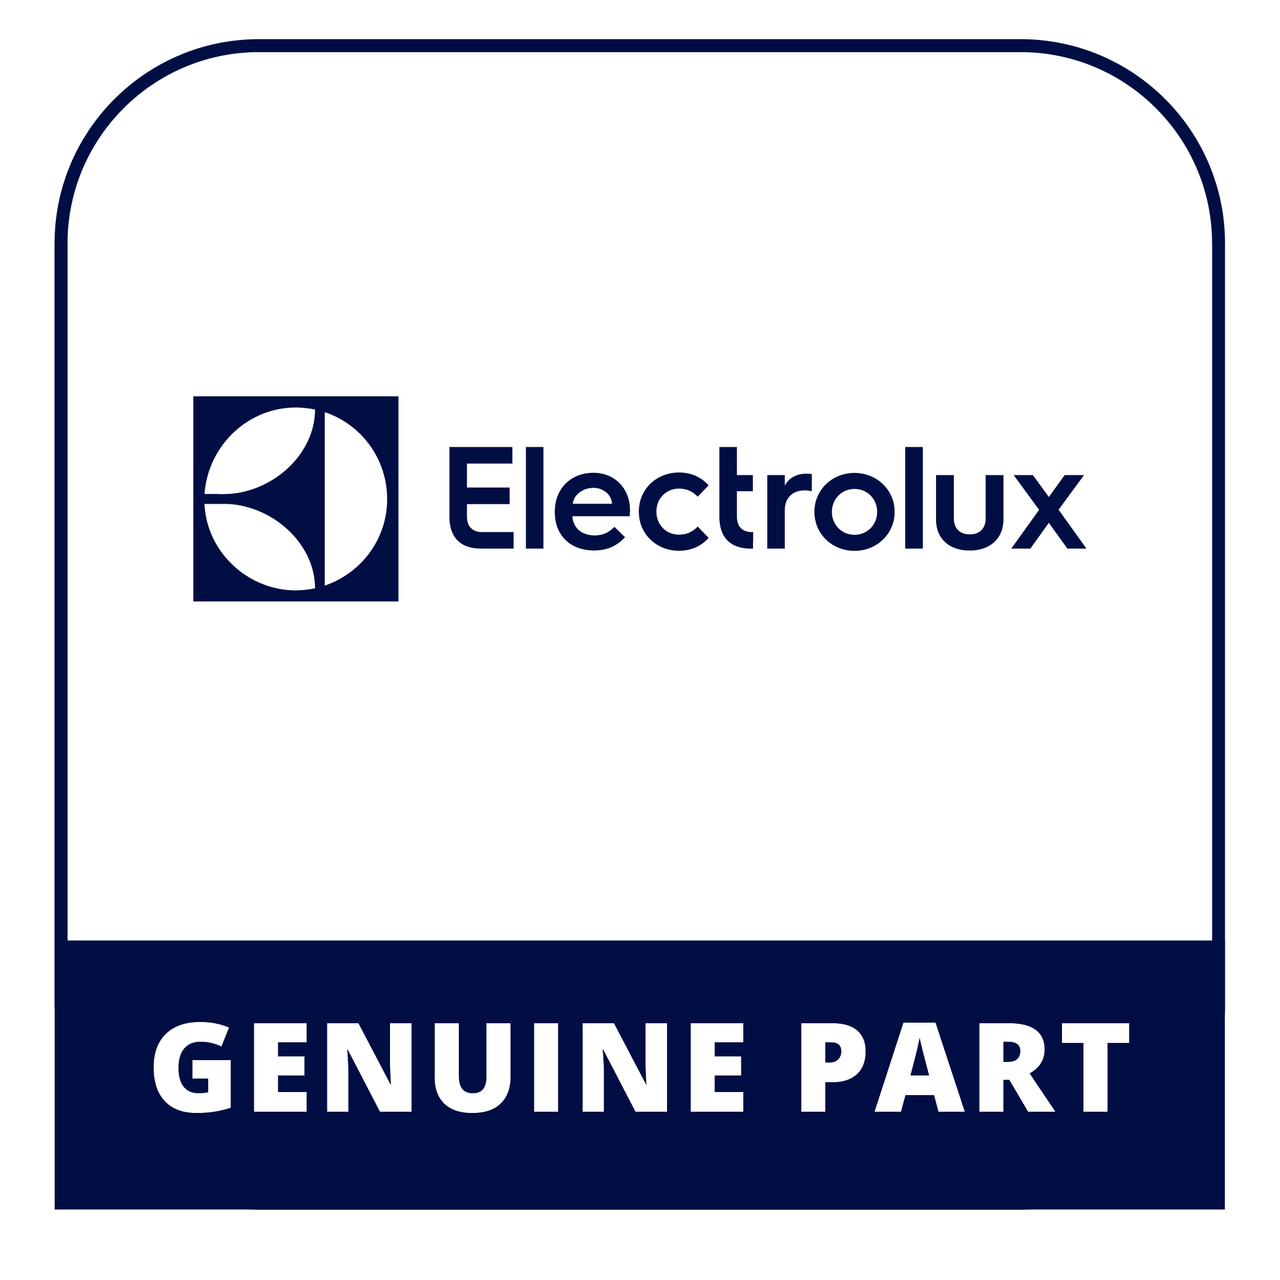 Frigidaire - Electrolux 316283204 - Shield - Genuine Electrolux Part